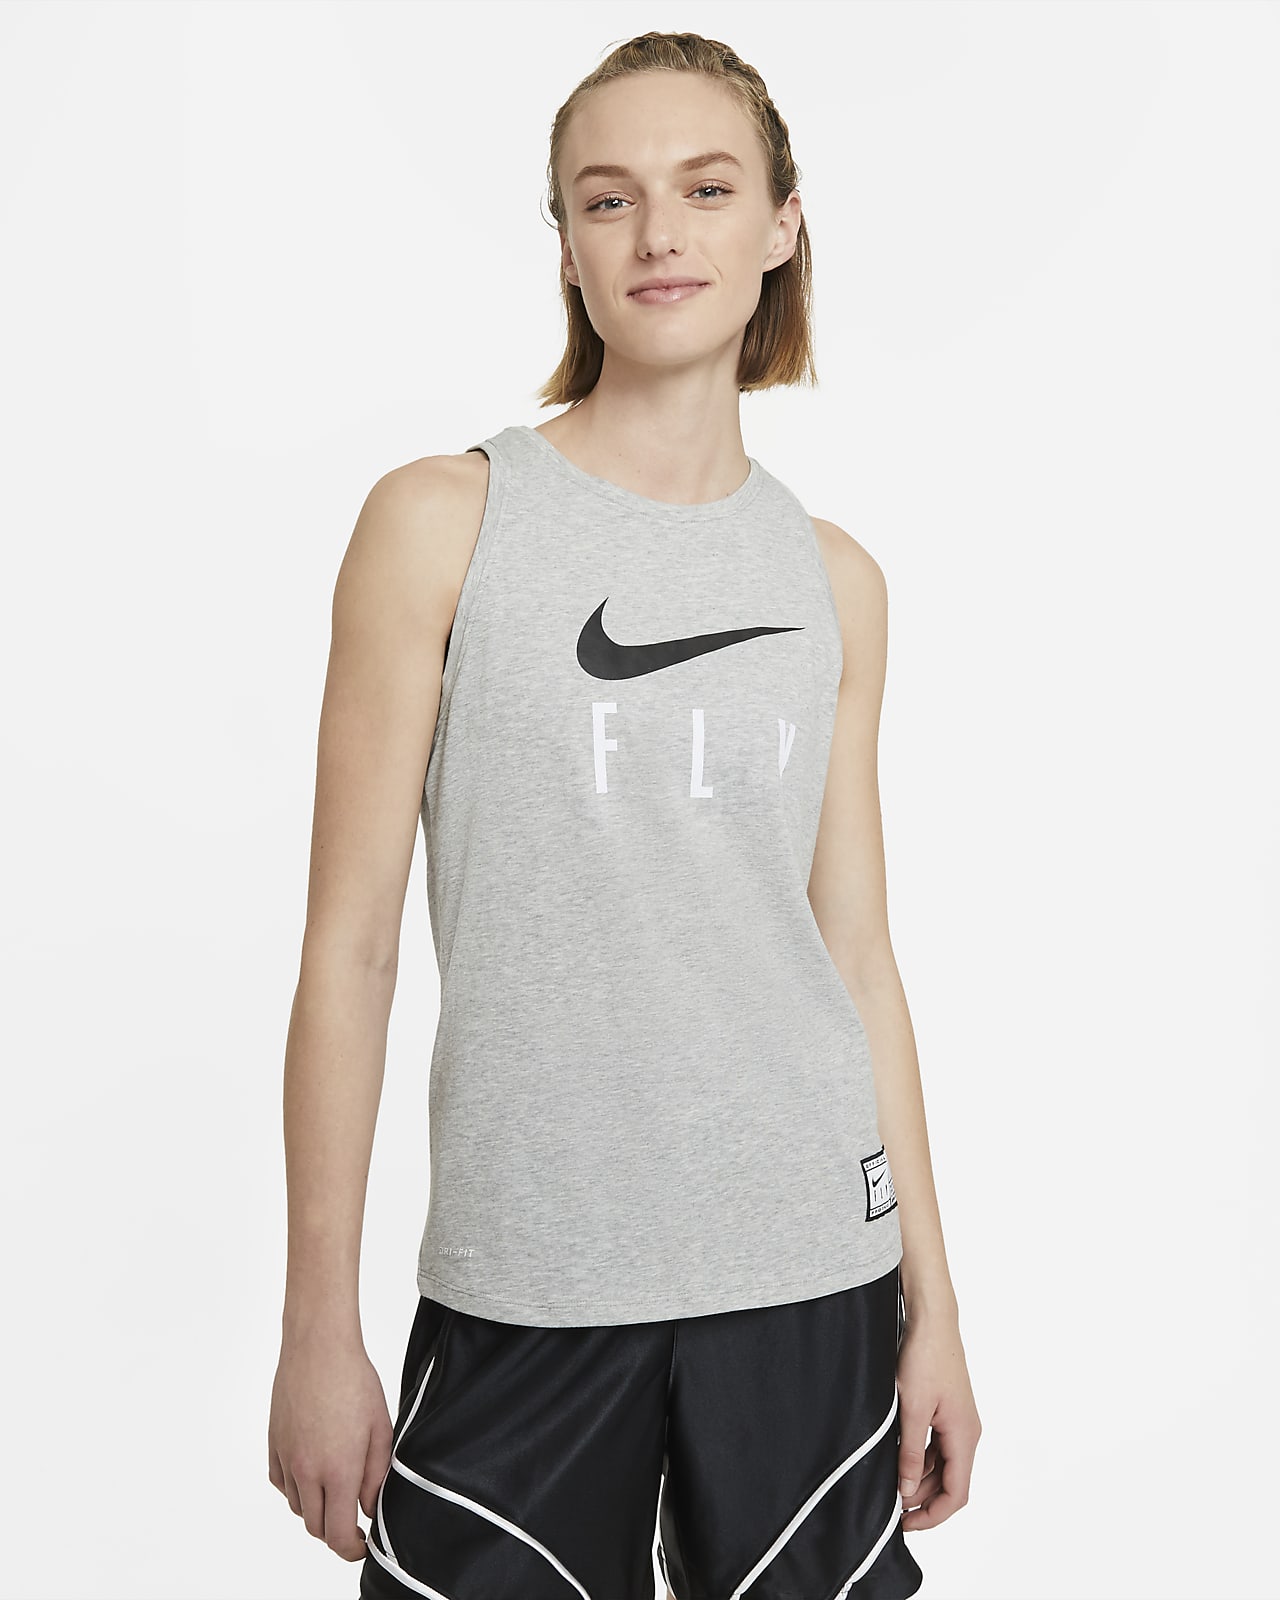 Camiseta Nike Dri-fit Swoosh Fly Feminina